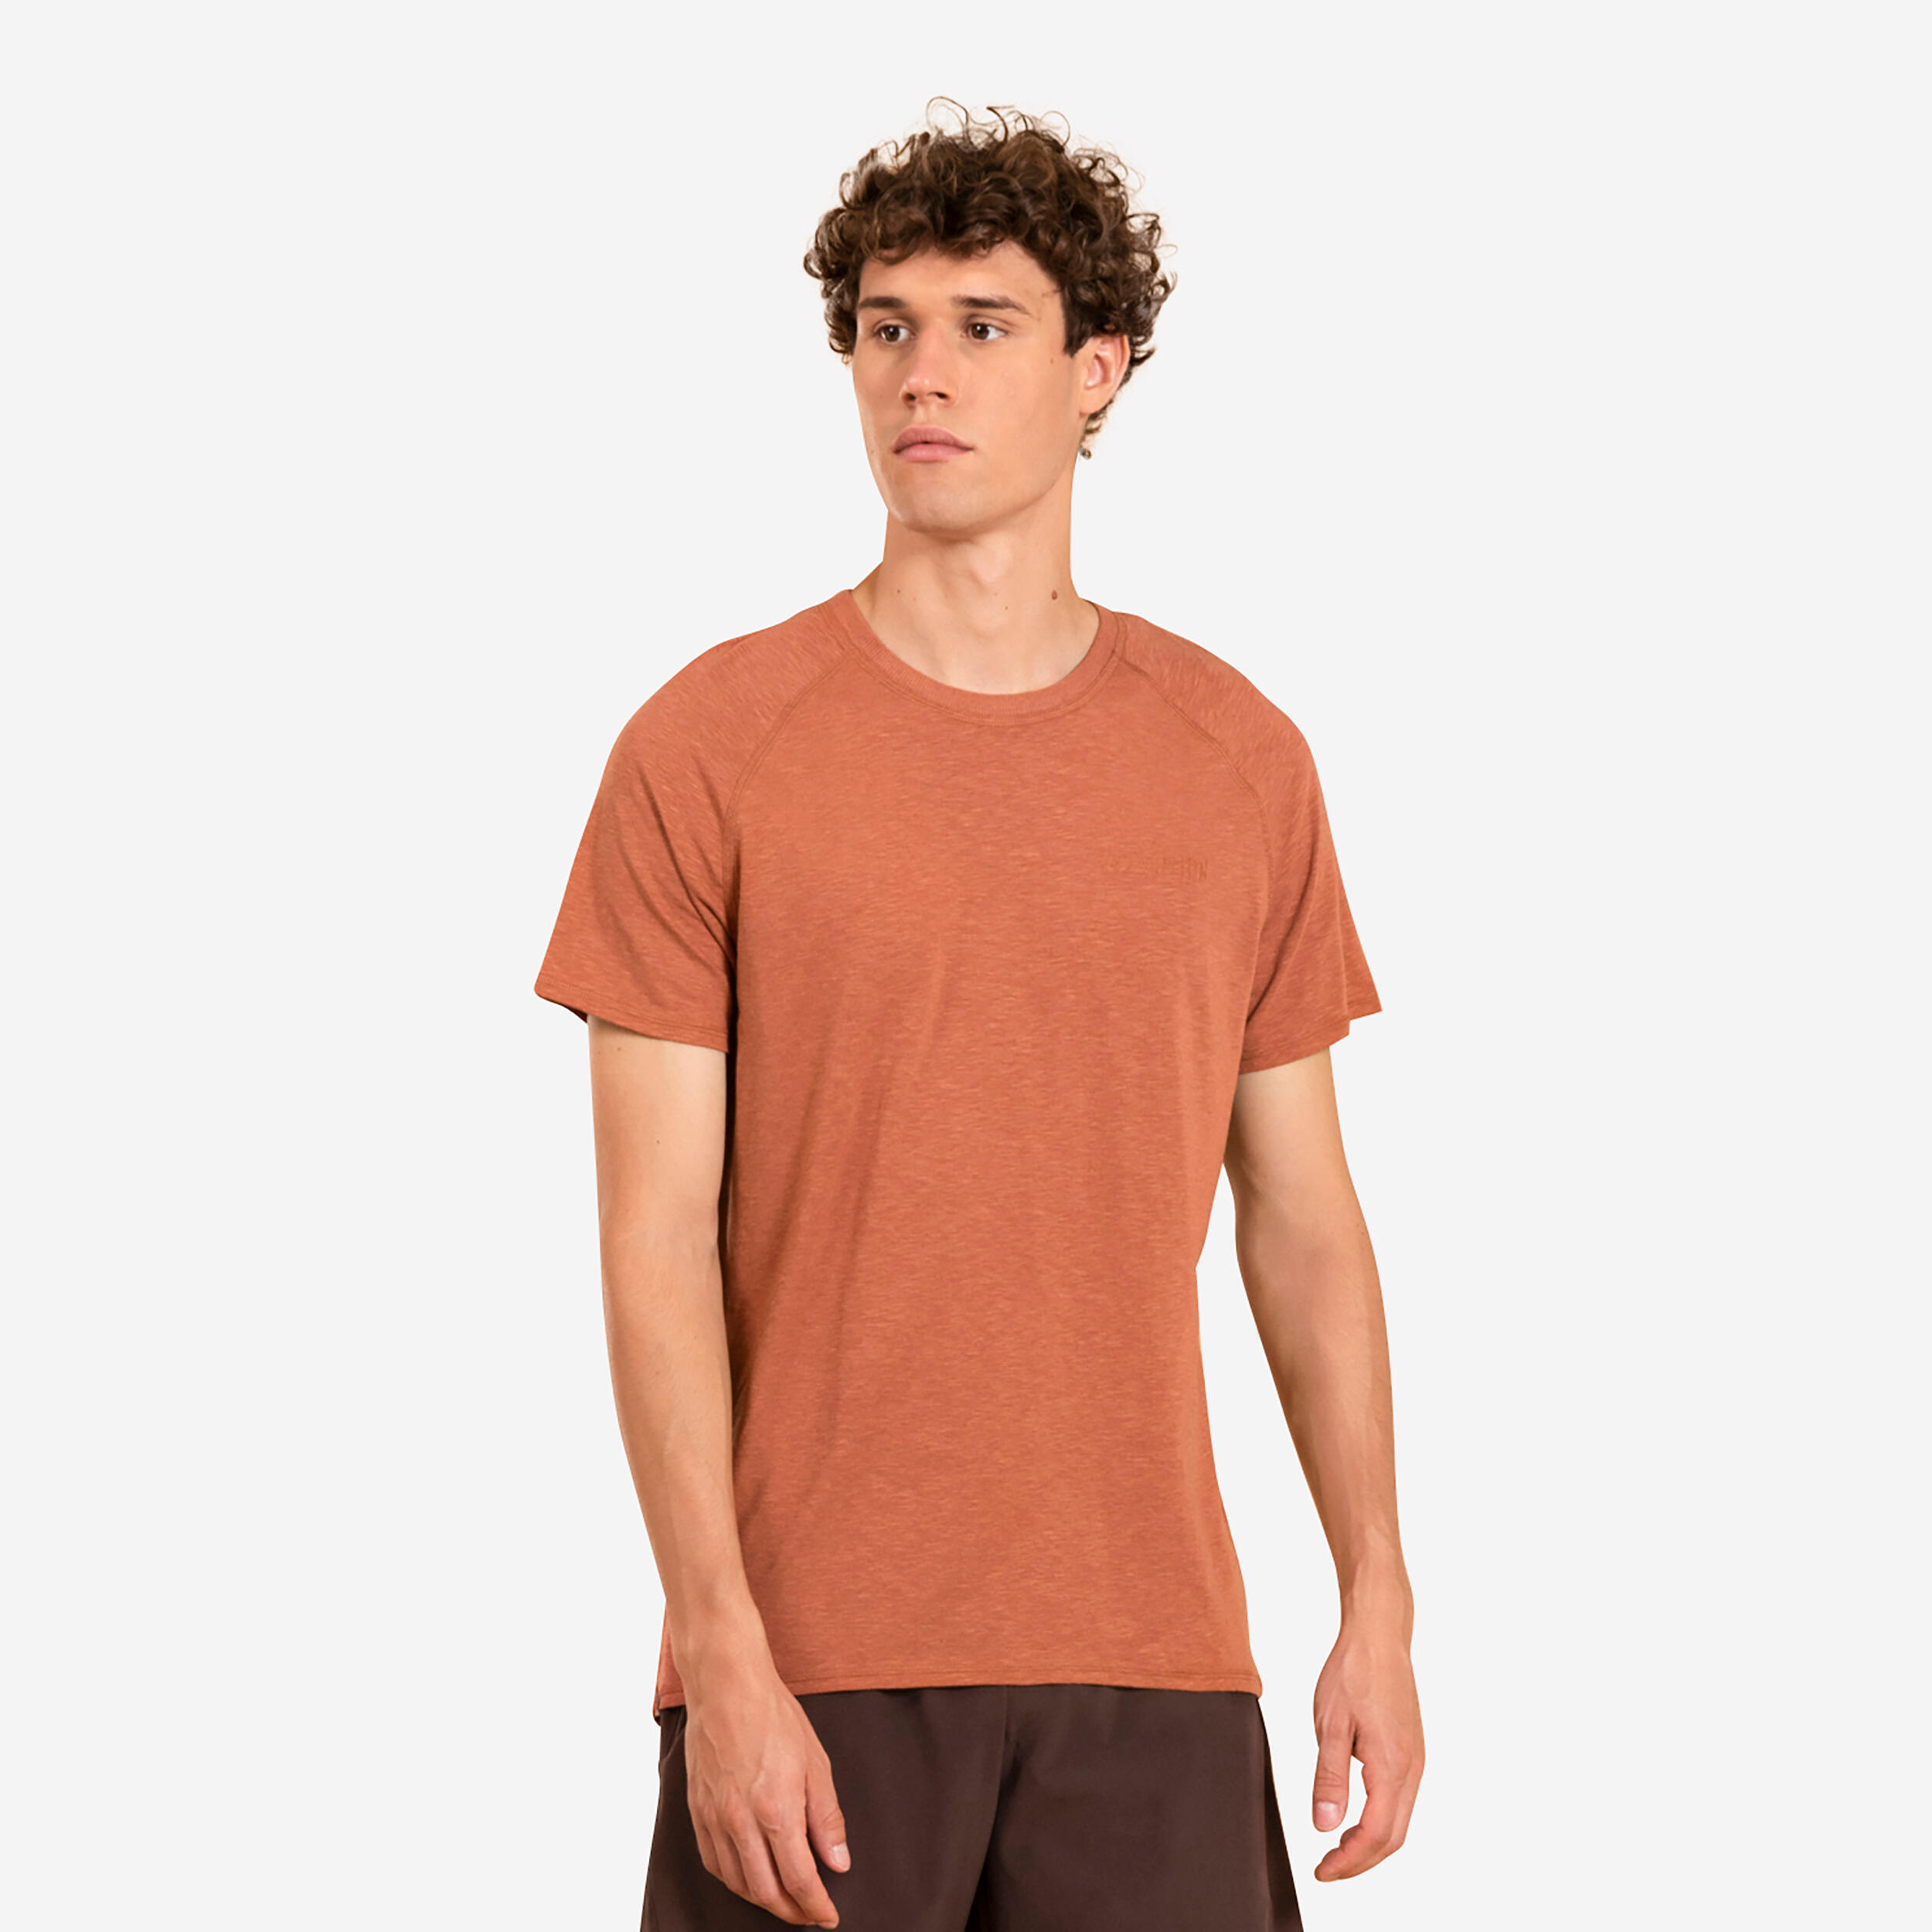 Men's Short-Sleeved Gentle Yoga T-Shirt in Natural Fabric - Terracotta 3/5